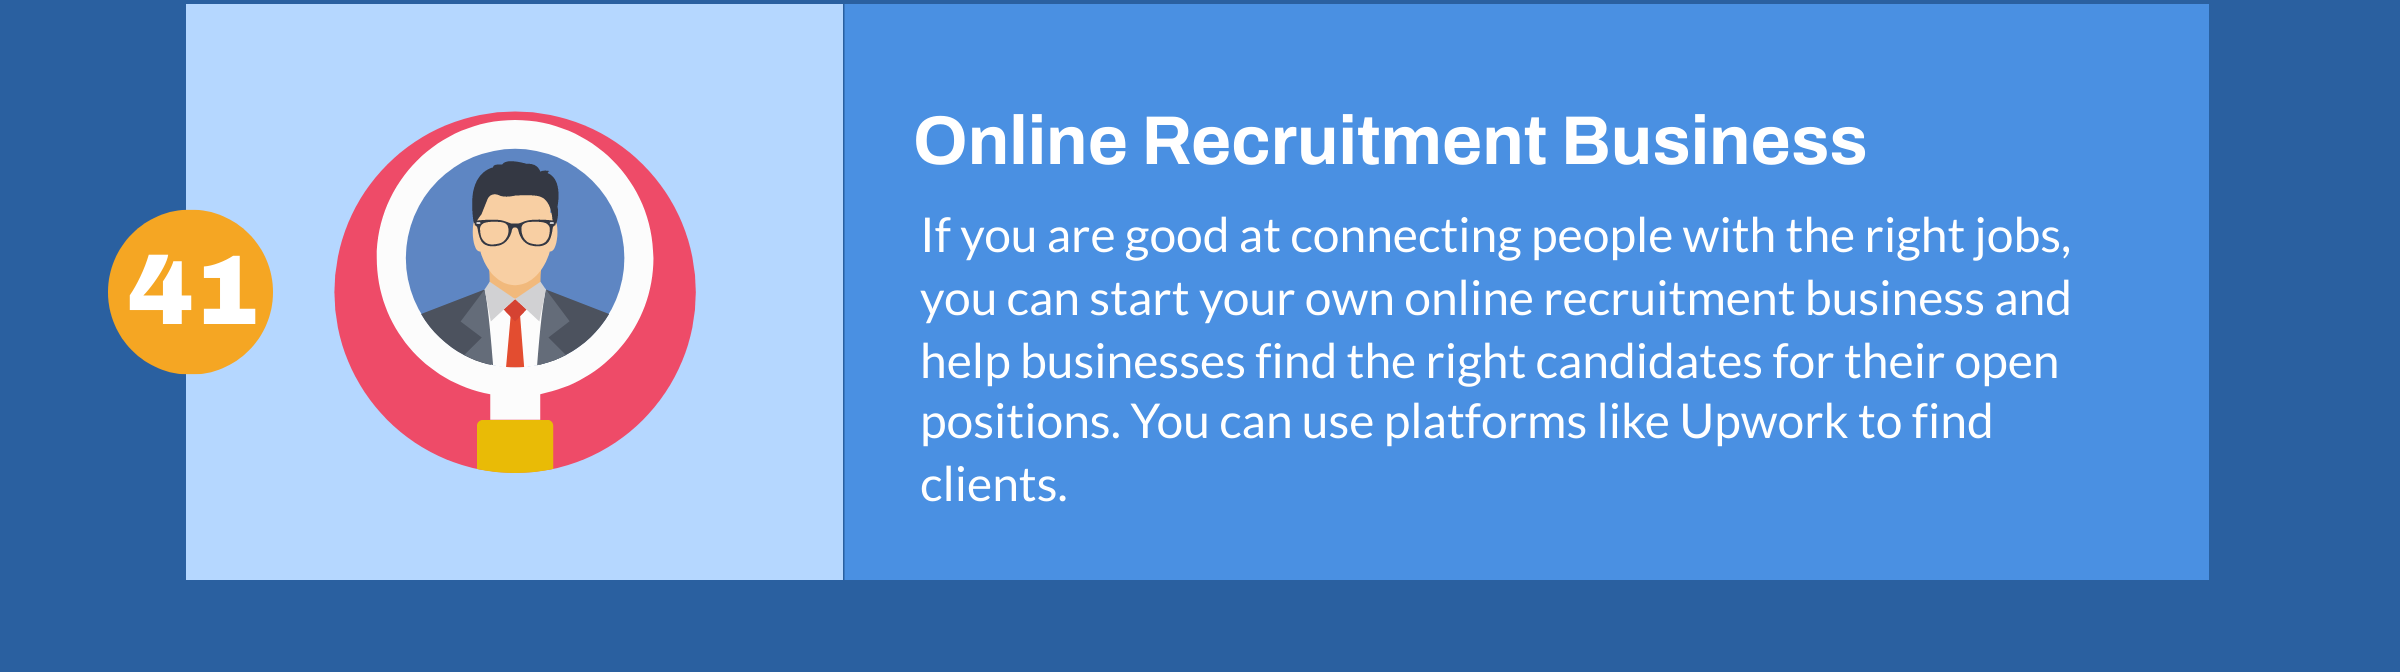 Afaceri de recrutare online